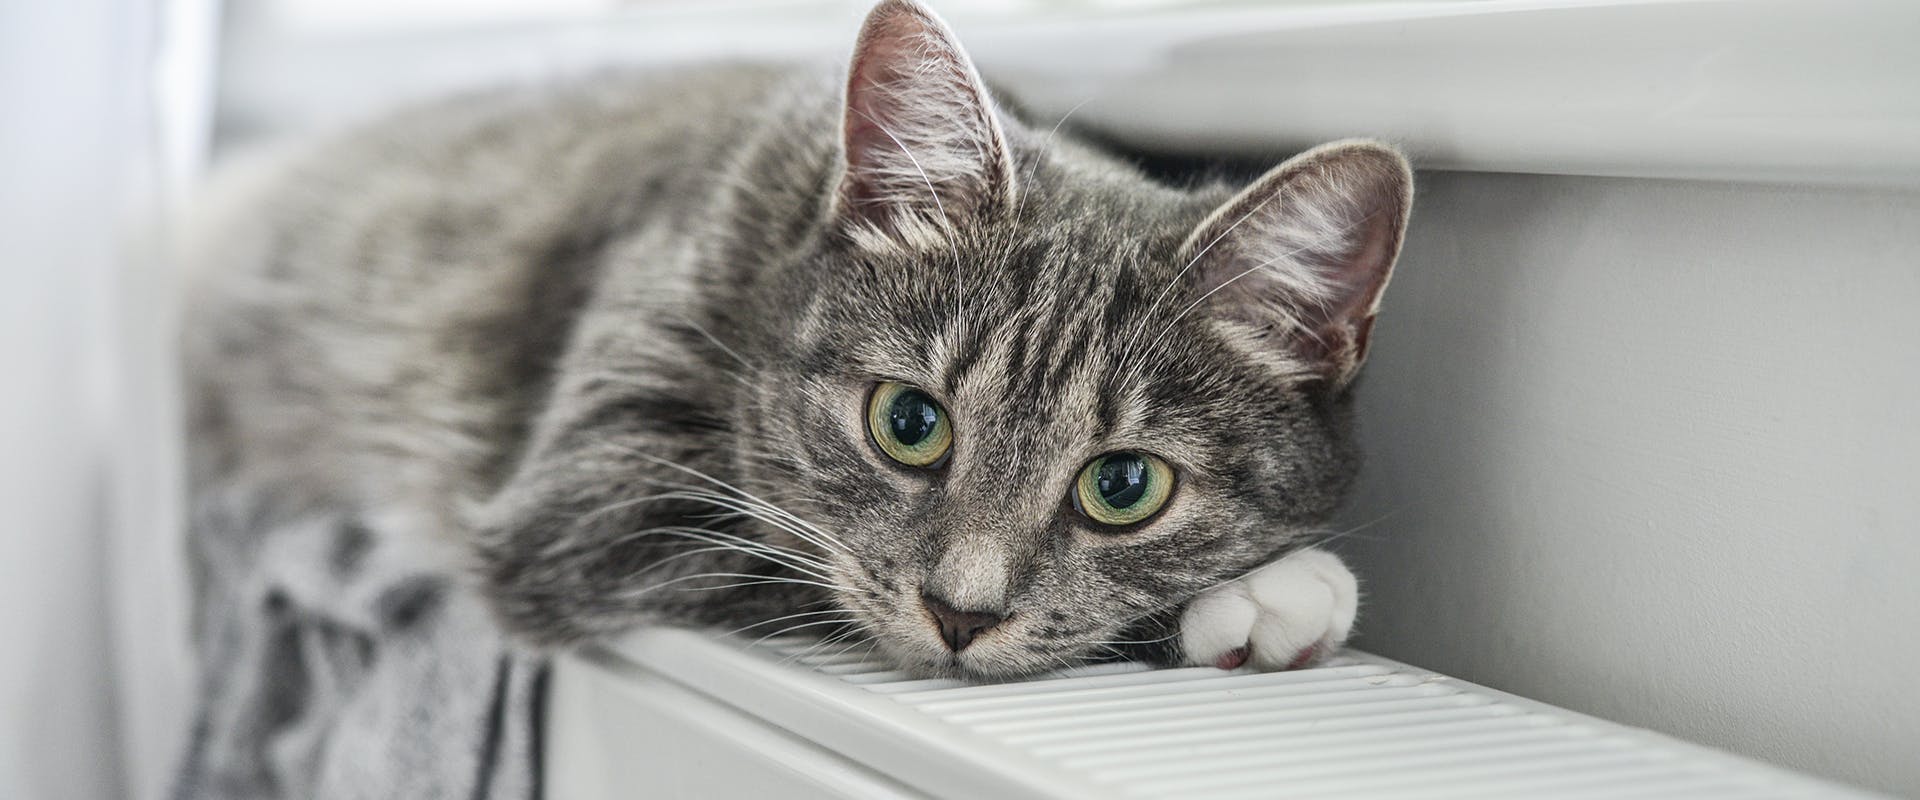 A gray tabby cat sitting on a radiator 